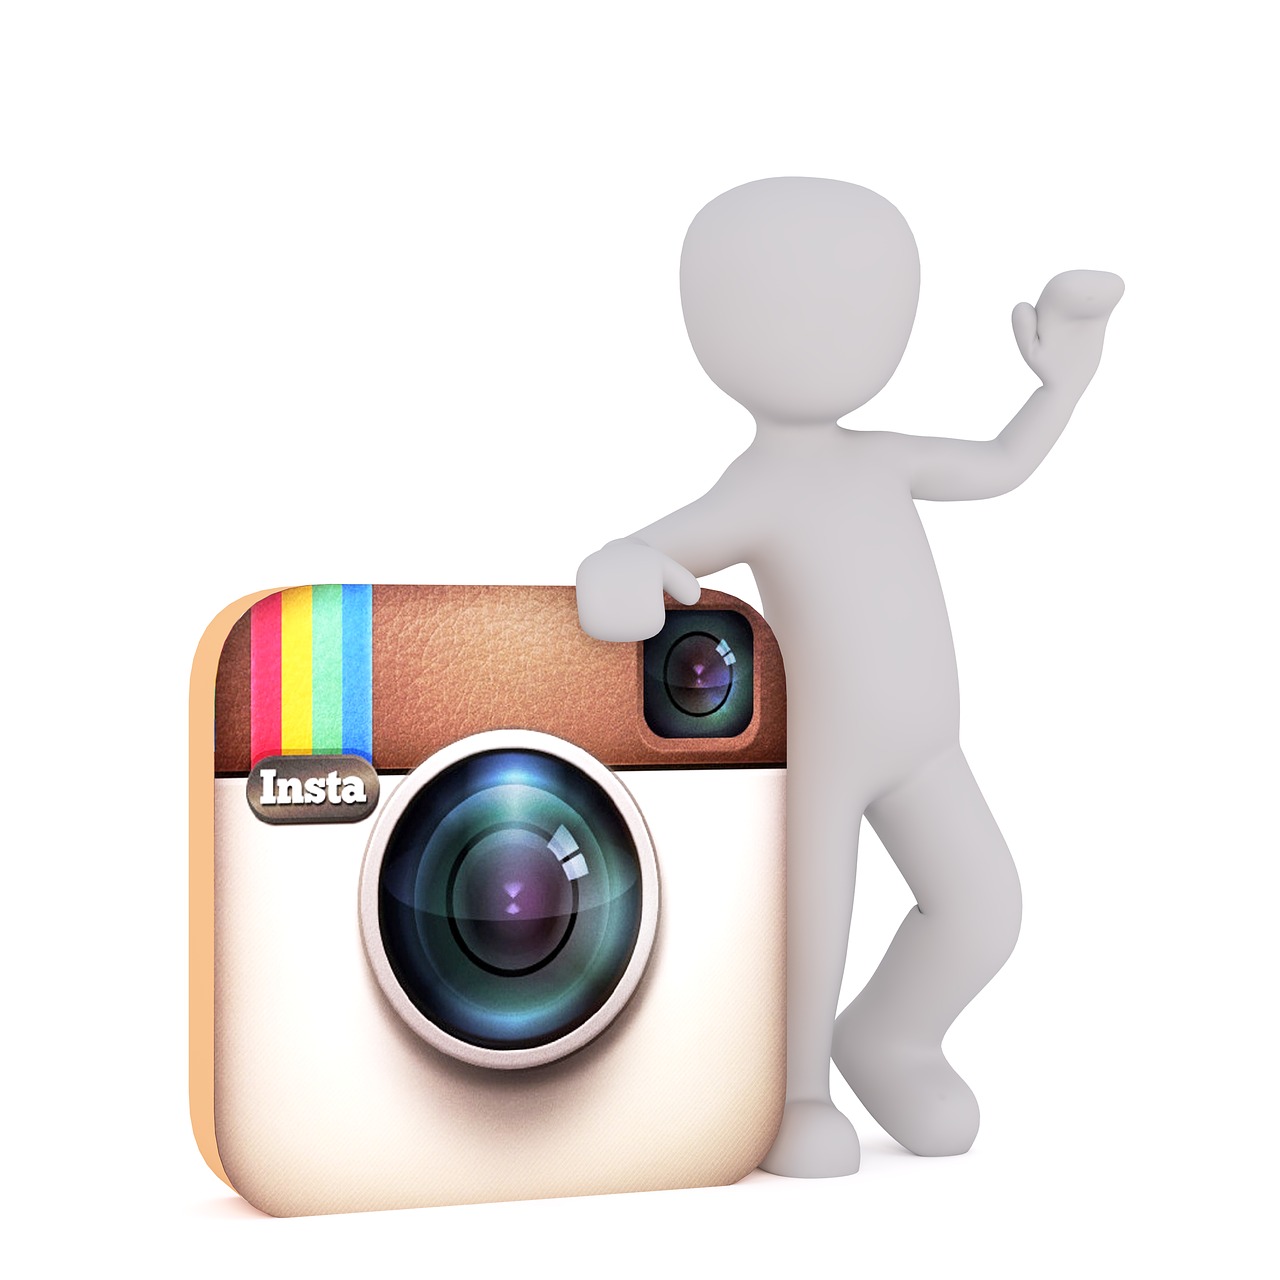 Instagram, Baltas Vyriškas, 3D Modelis, Izoliuotas, 3D, Modelis, Viso Kūno, Balta, 3D Vyras, App